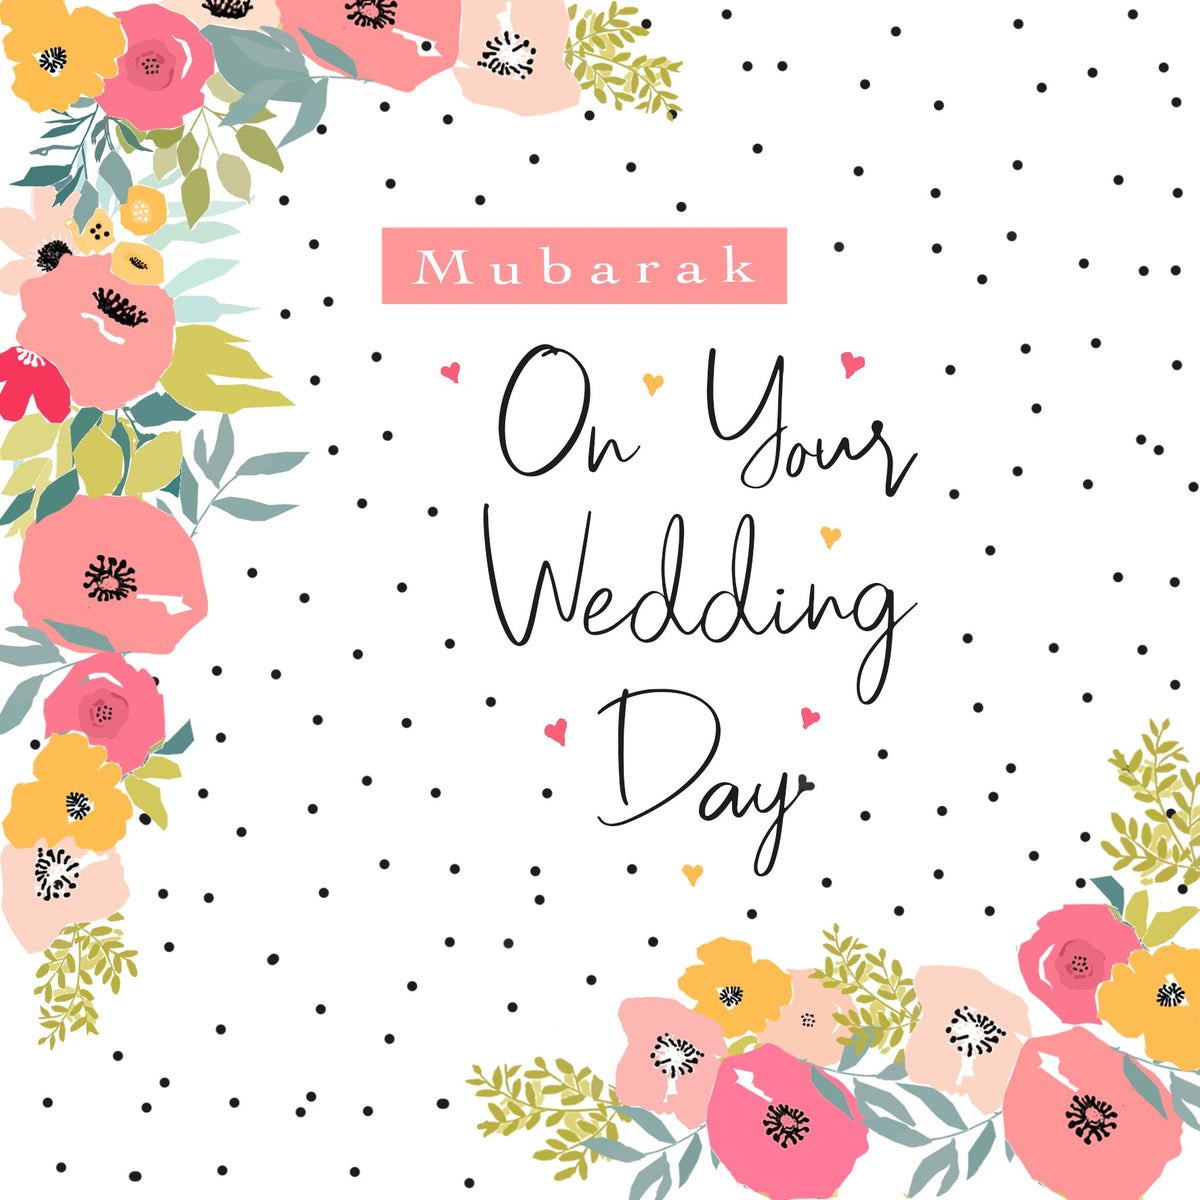 Mubarak On Your Wedding Day